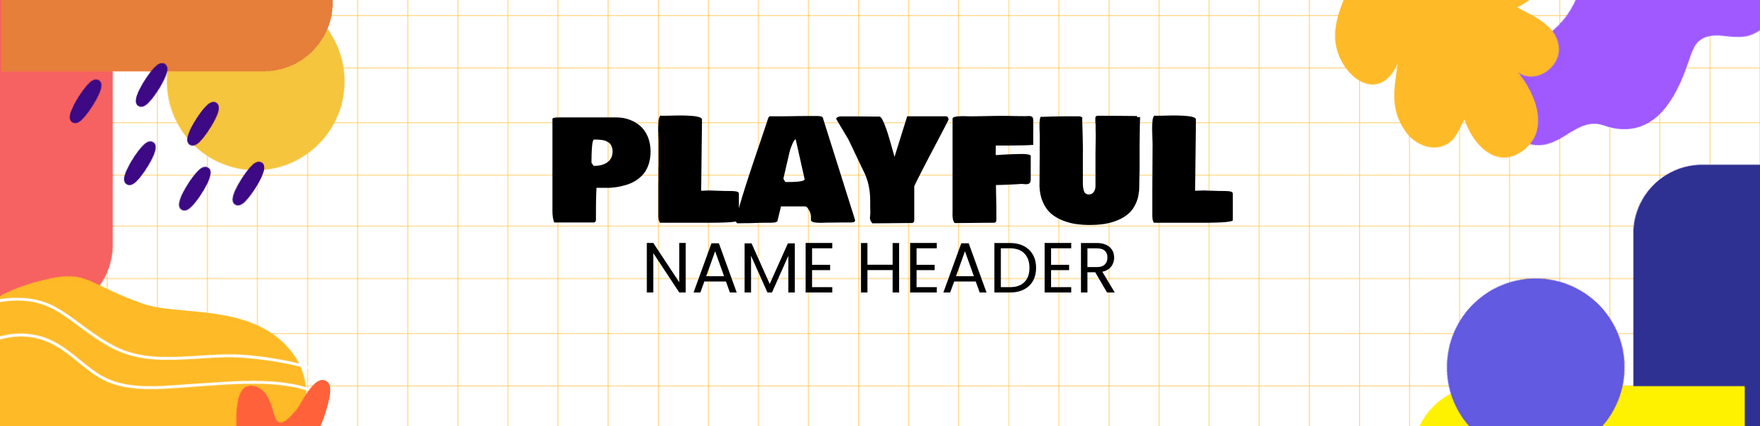 Playful Name Header Template